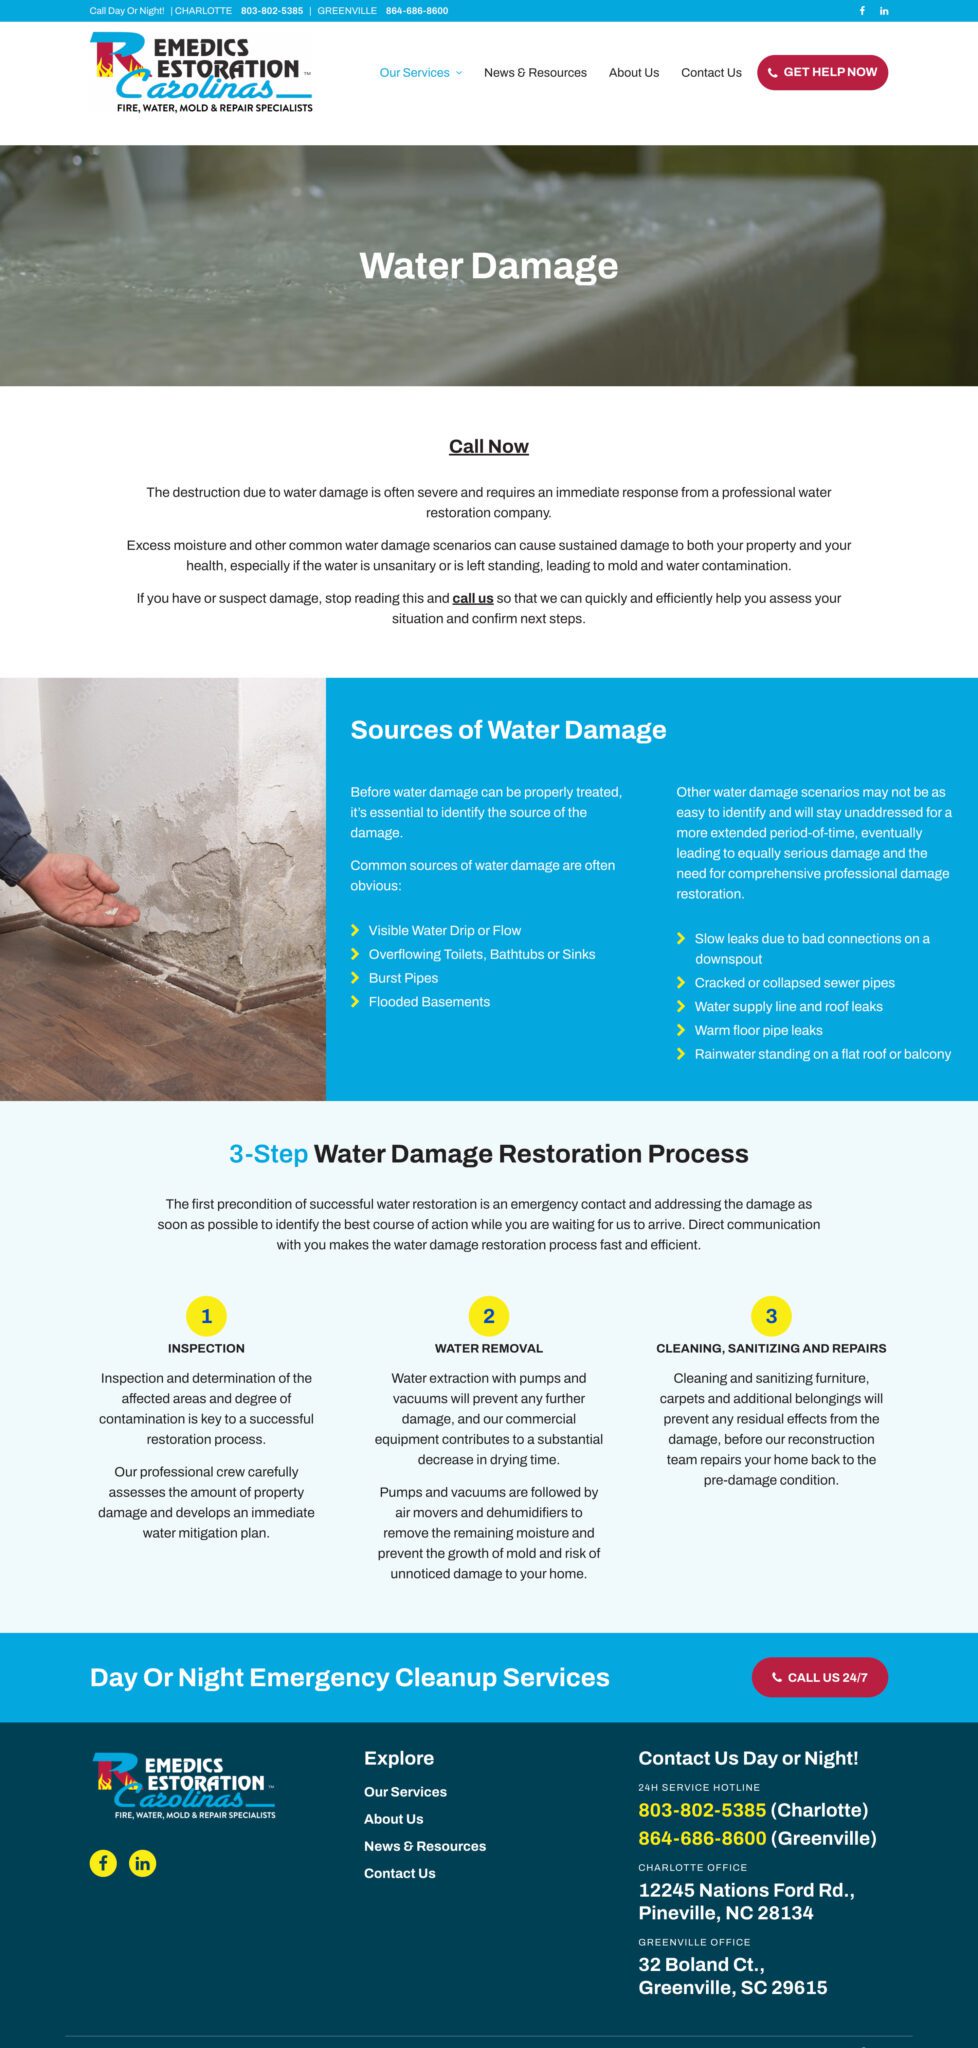 Remedics Restoration website water damage page screenshot